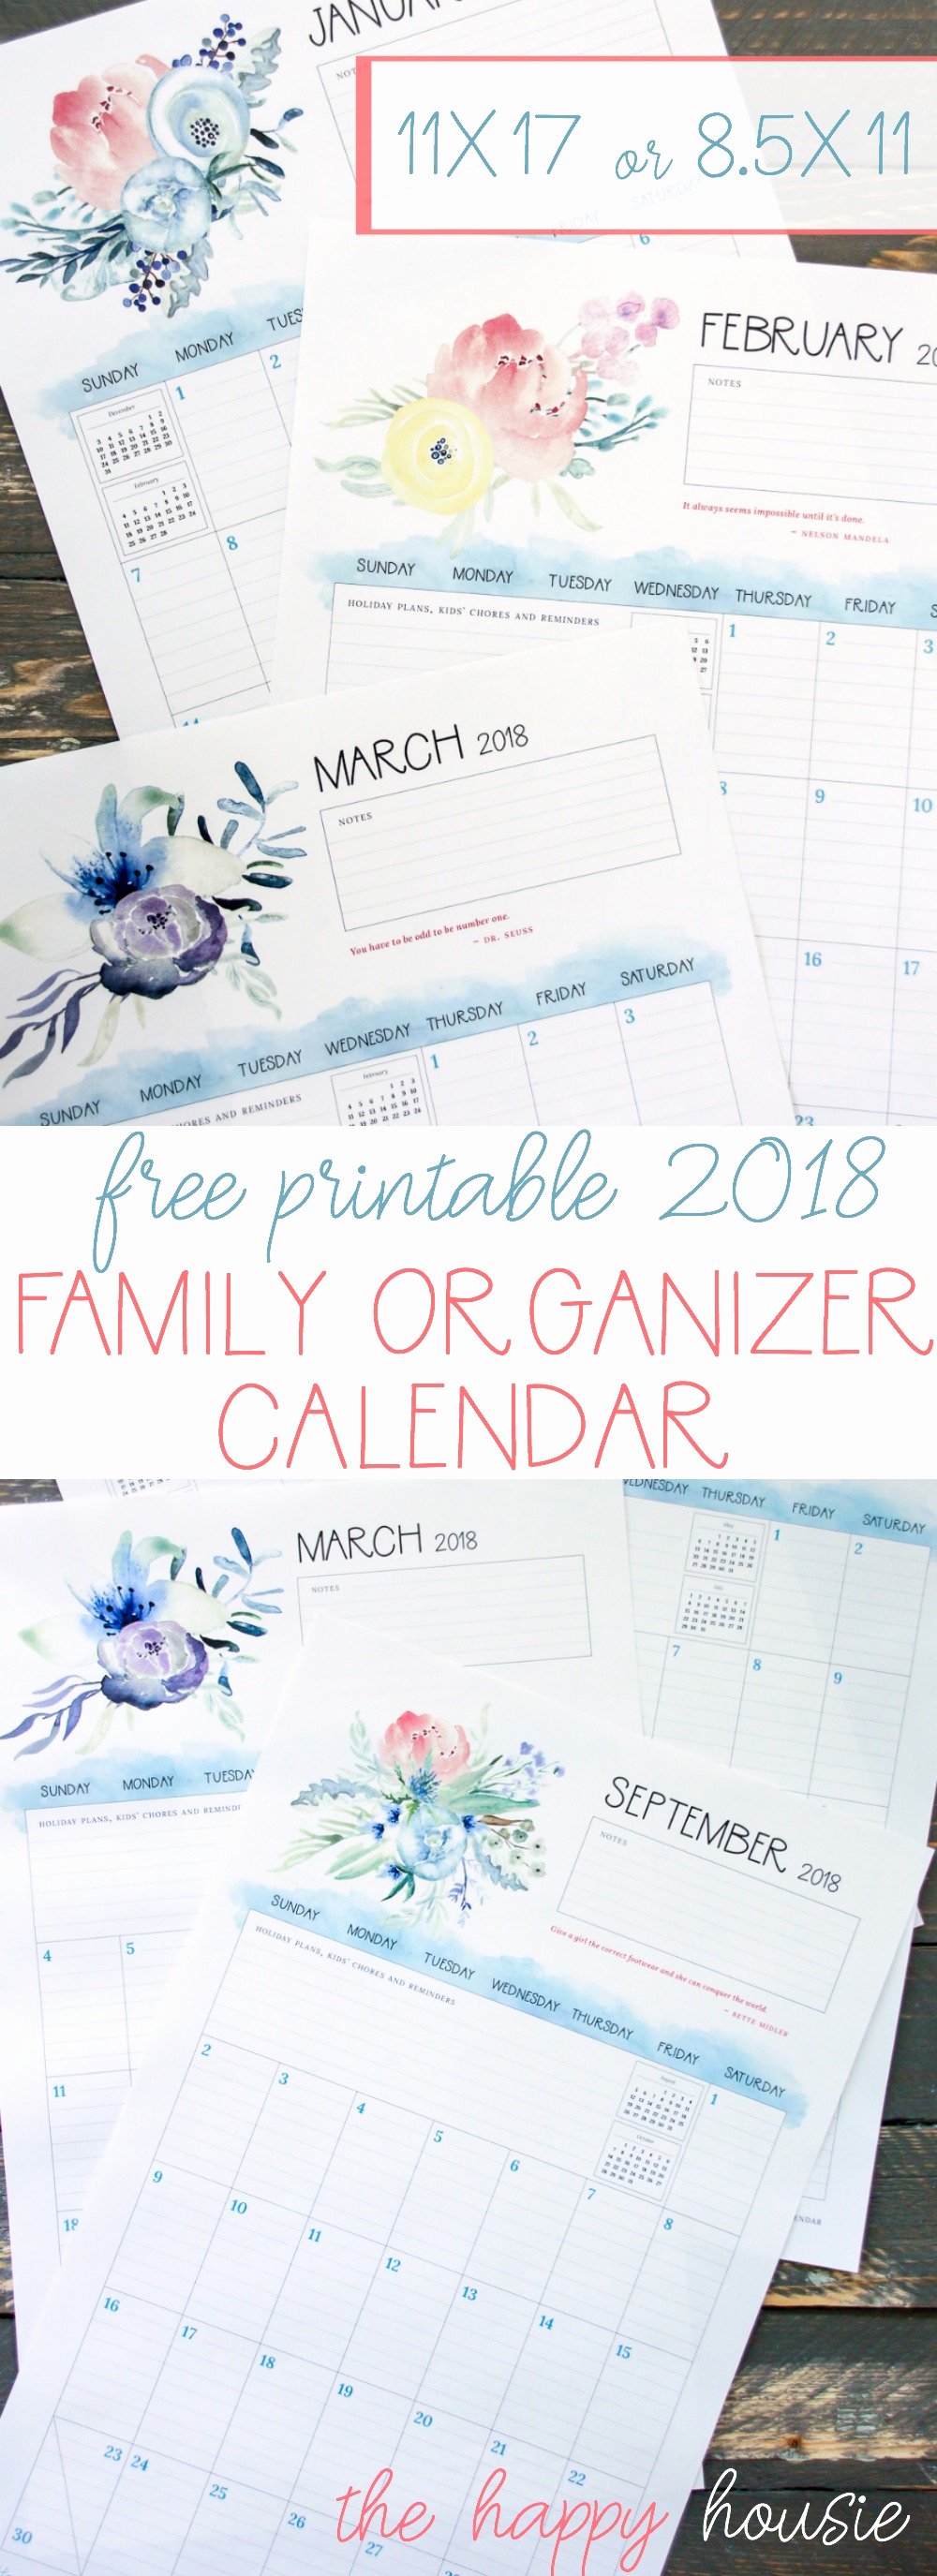 Free Printable Family Calendar Fresh Free Printable 2018 Family organizer Calendar